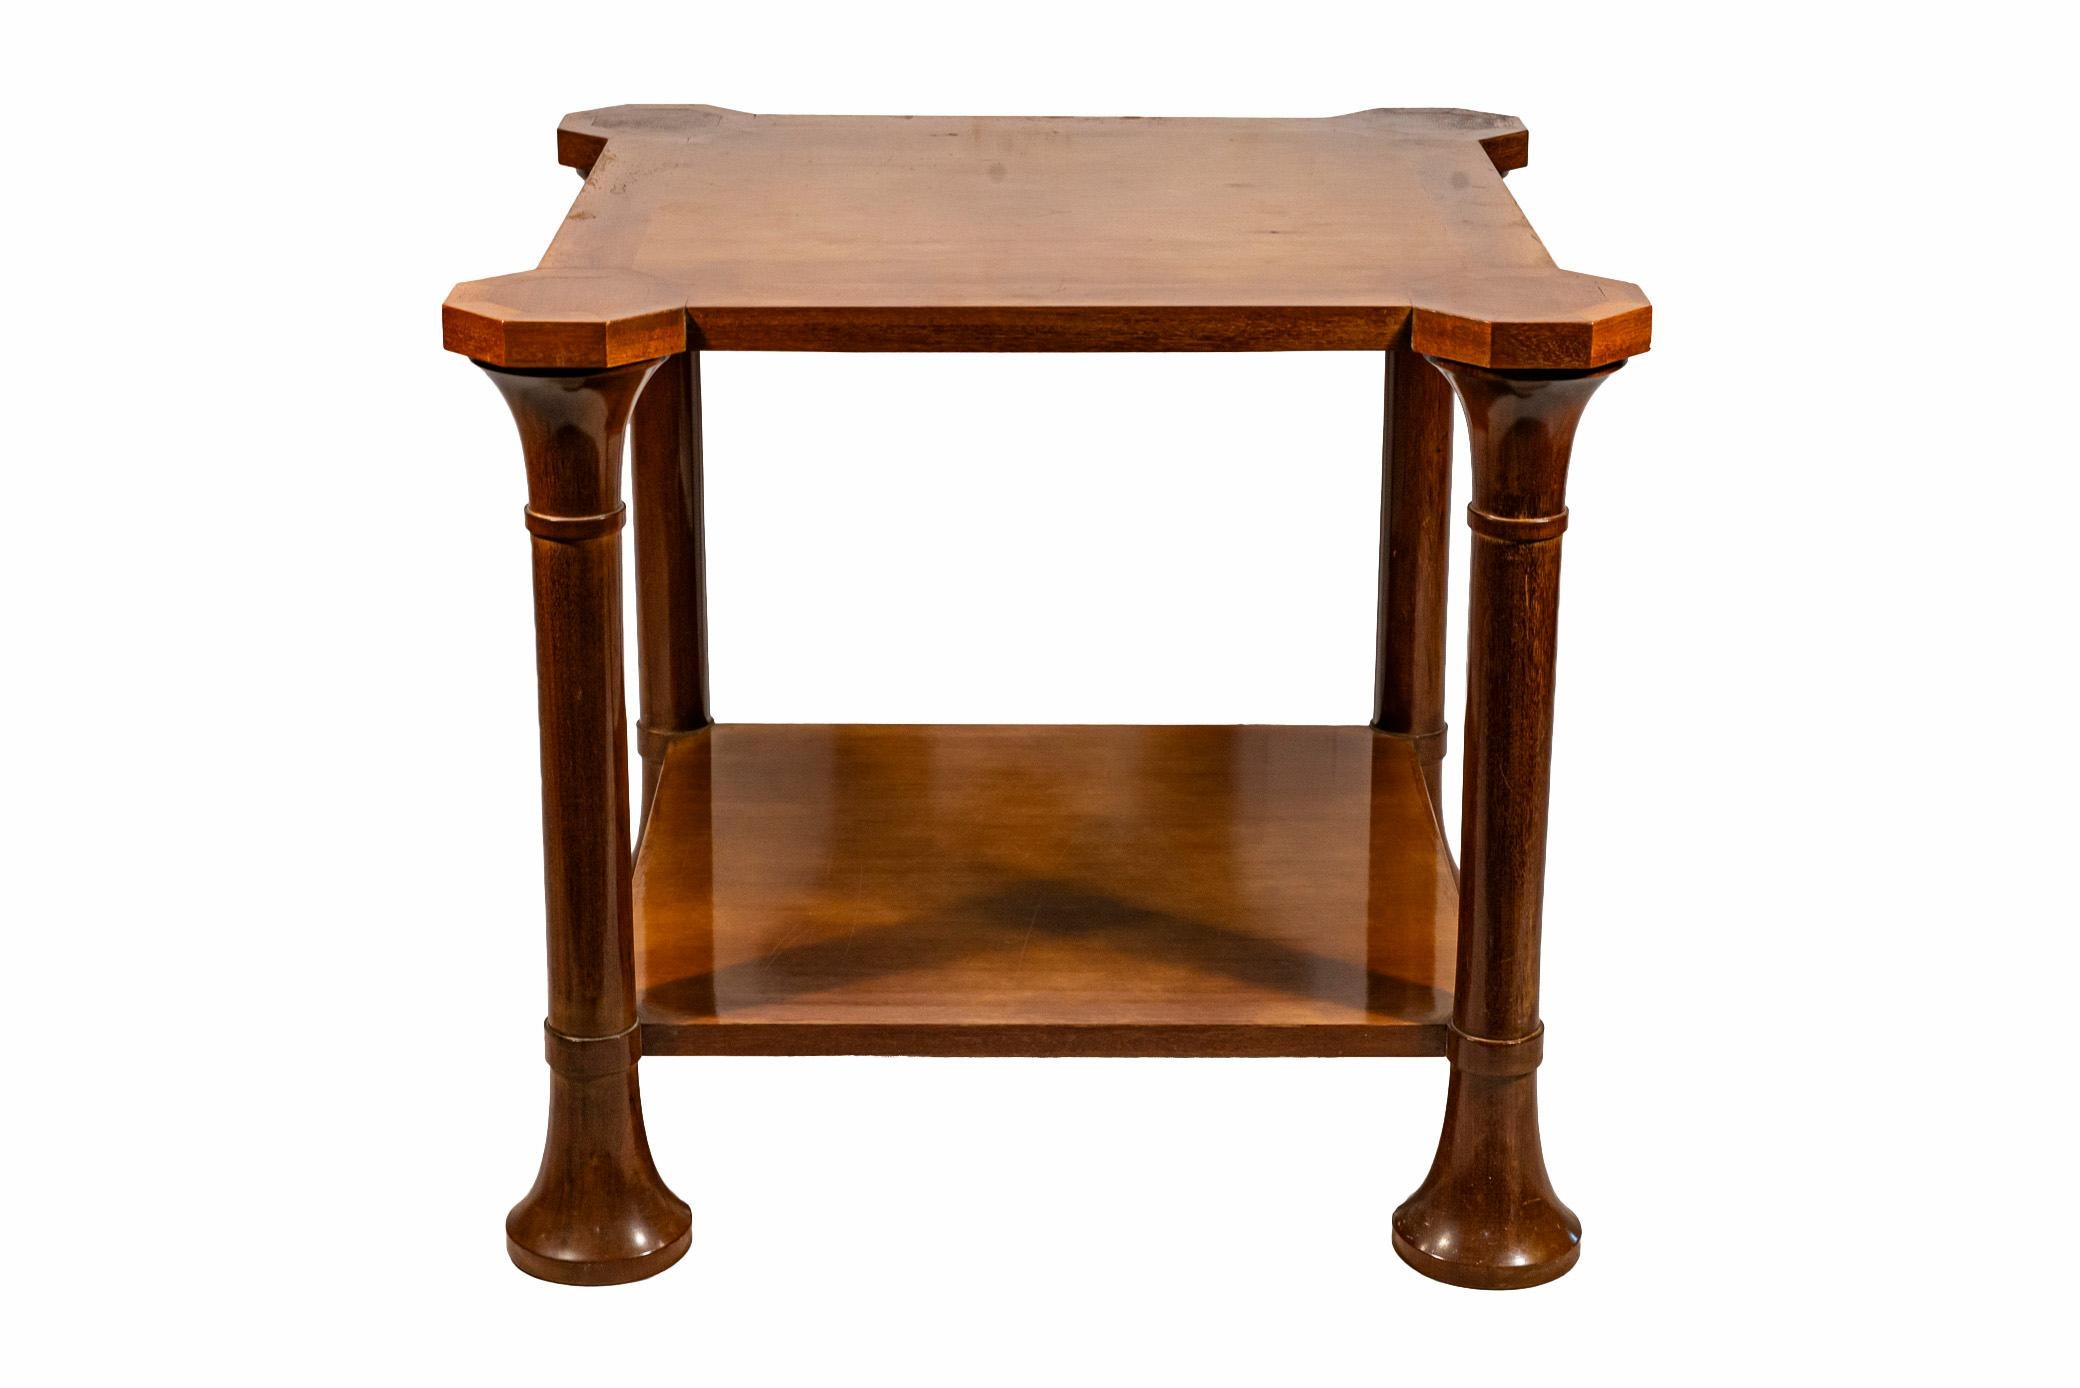 In the style of Robsjohn-Gibbings, 
Pair of tables, 
Egyptomania, 
Wood,
circa 1970, England.

Measures: width 70 cm, depth 70 cm, height 62 cm.